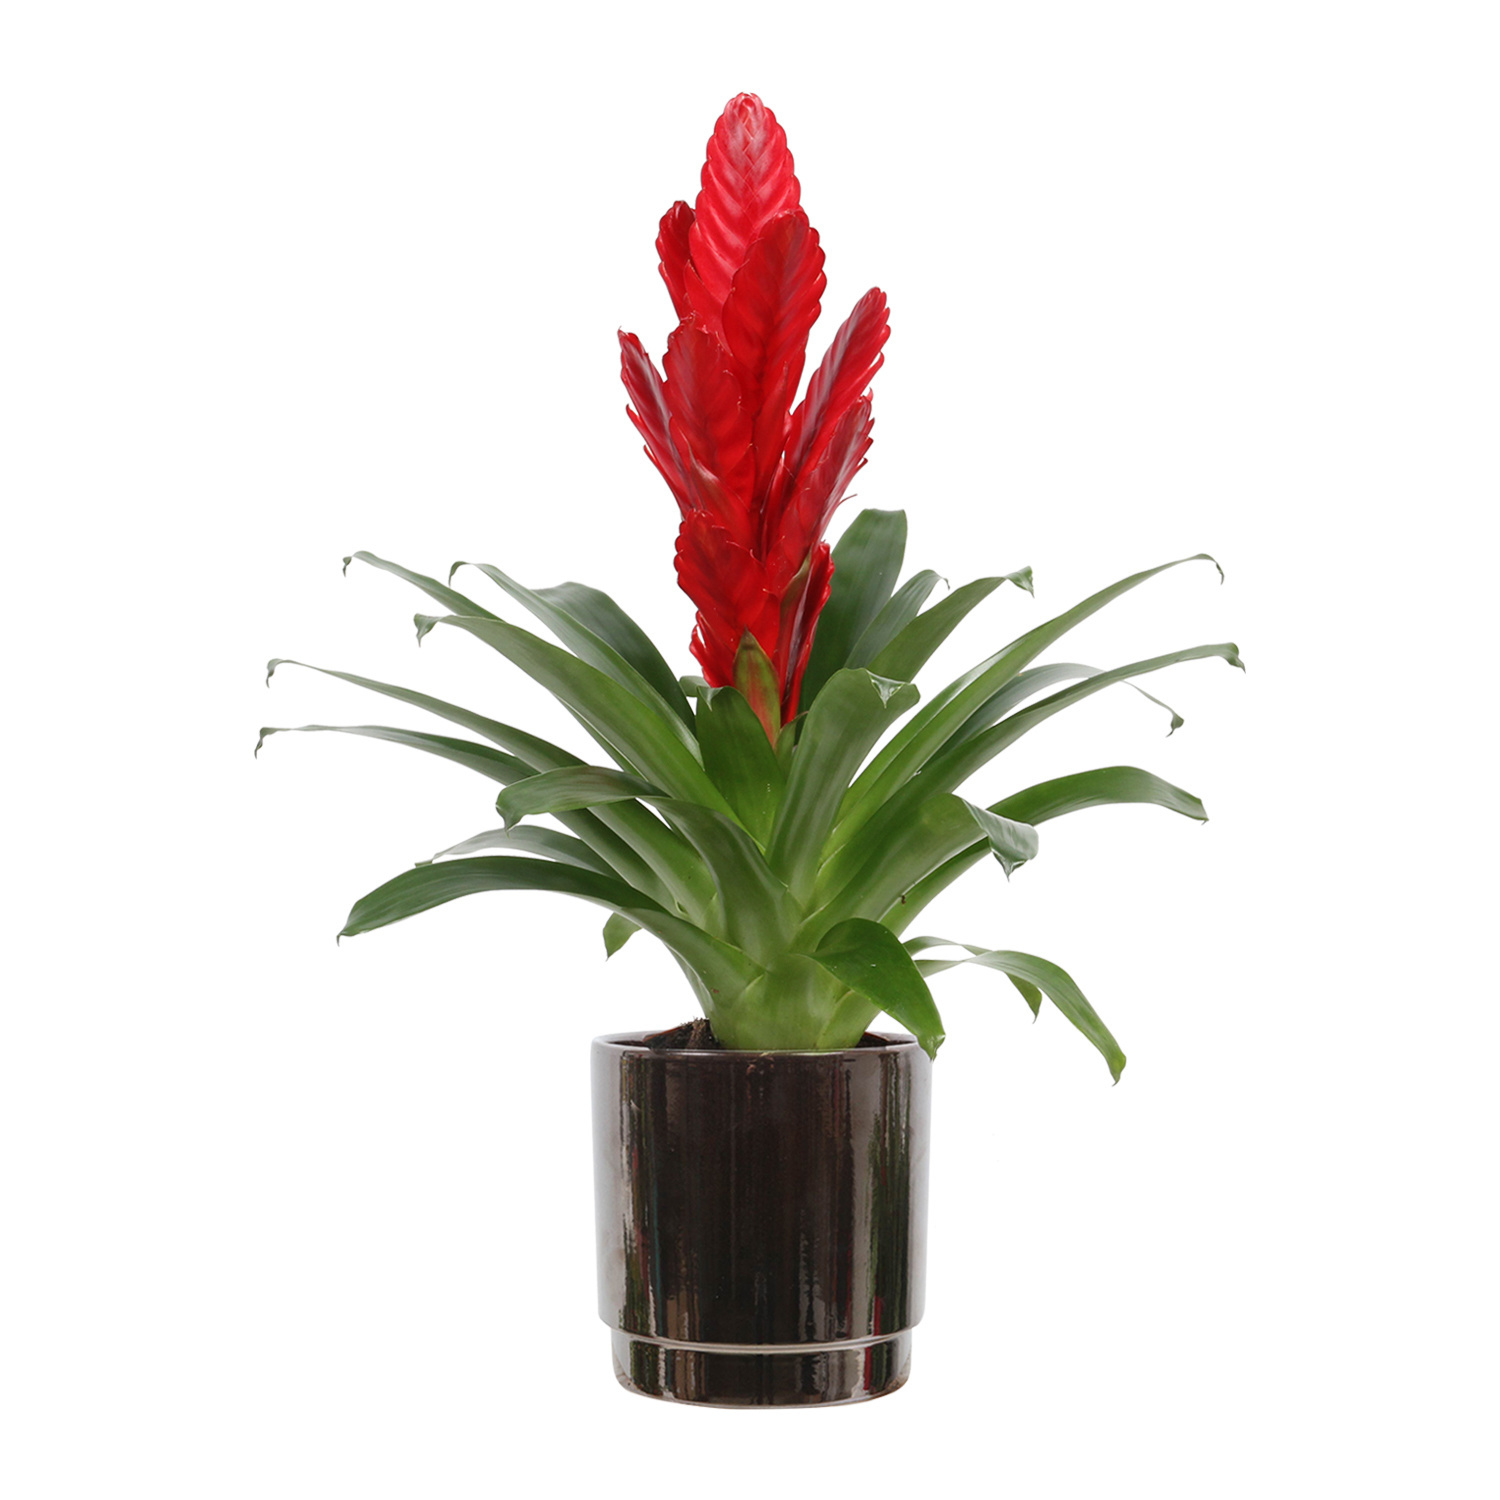 Vriesea Intenso Rood single in pot - Fleurdirect